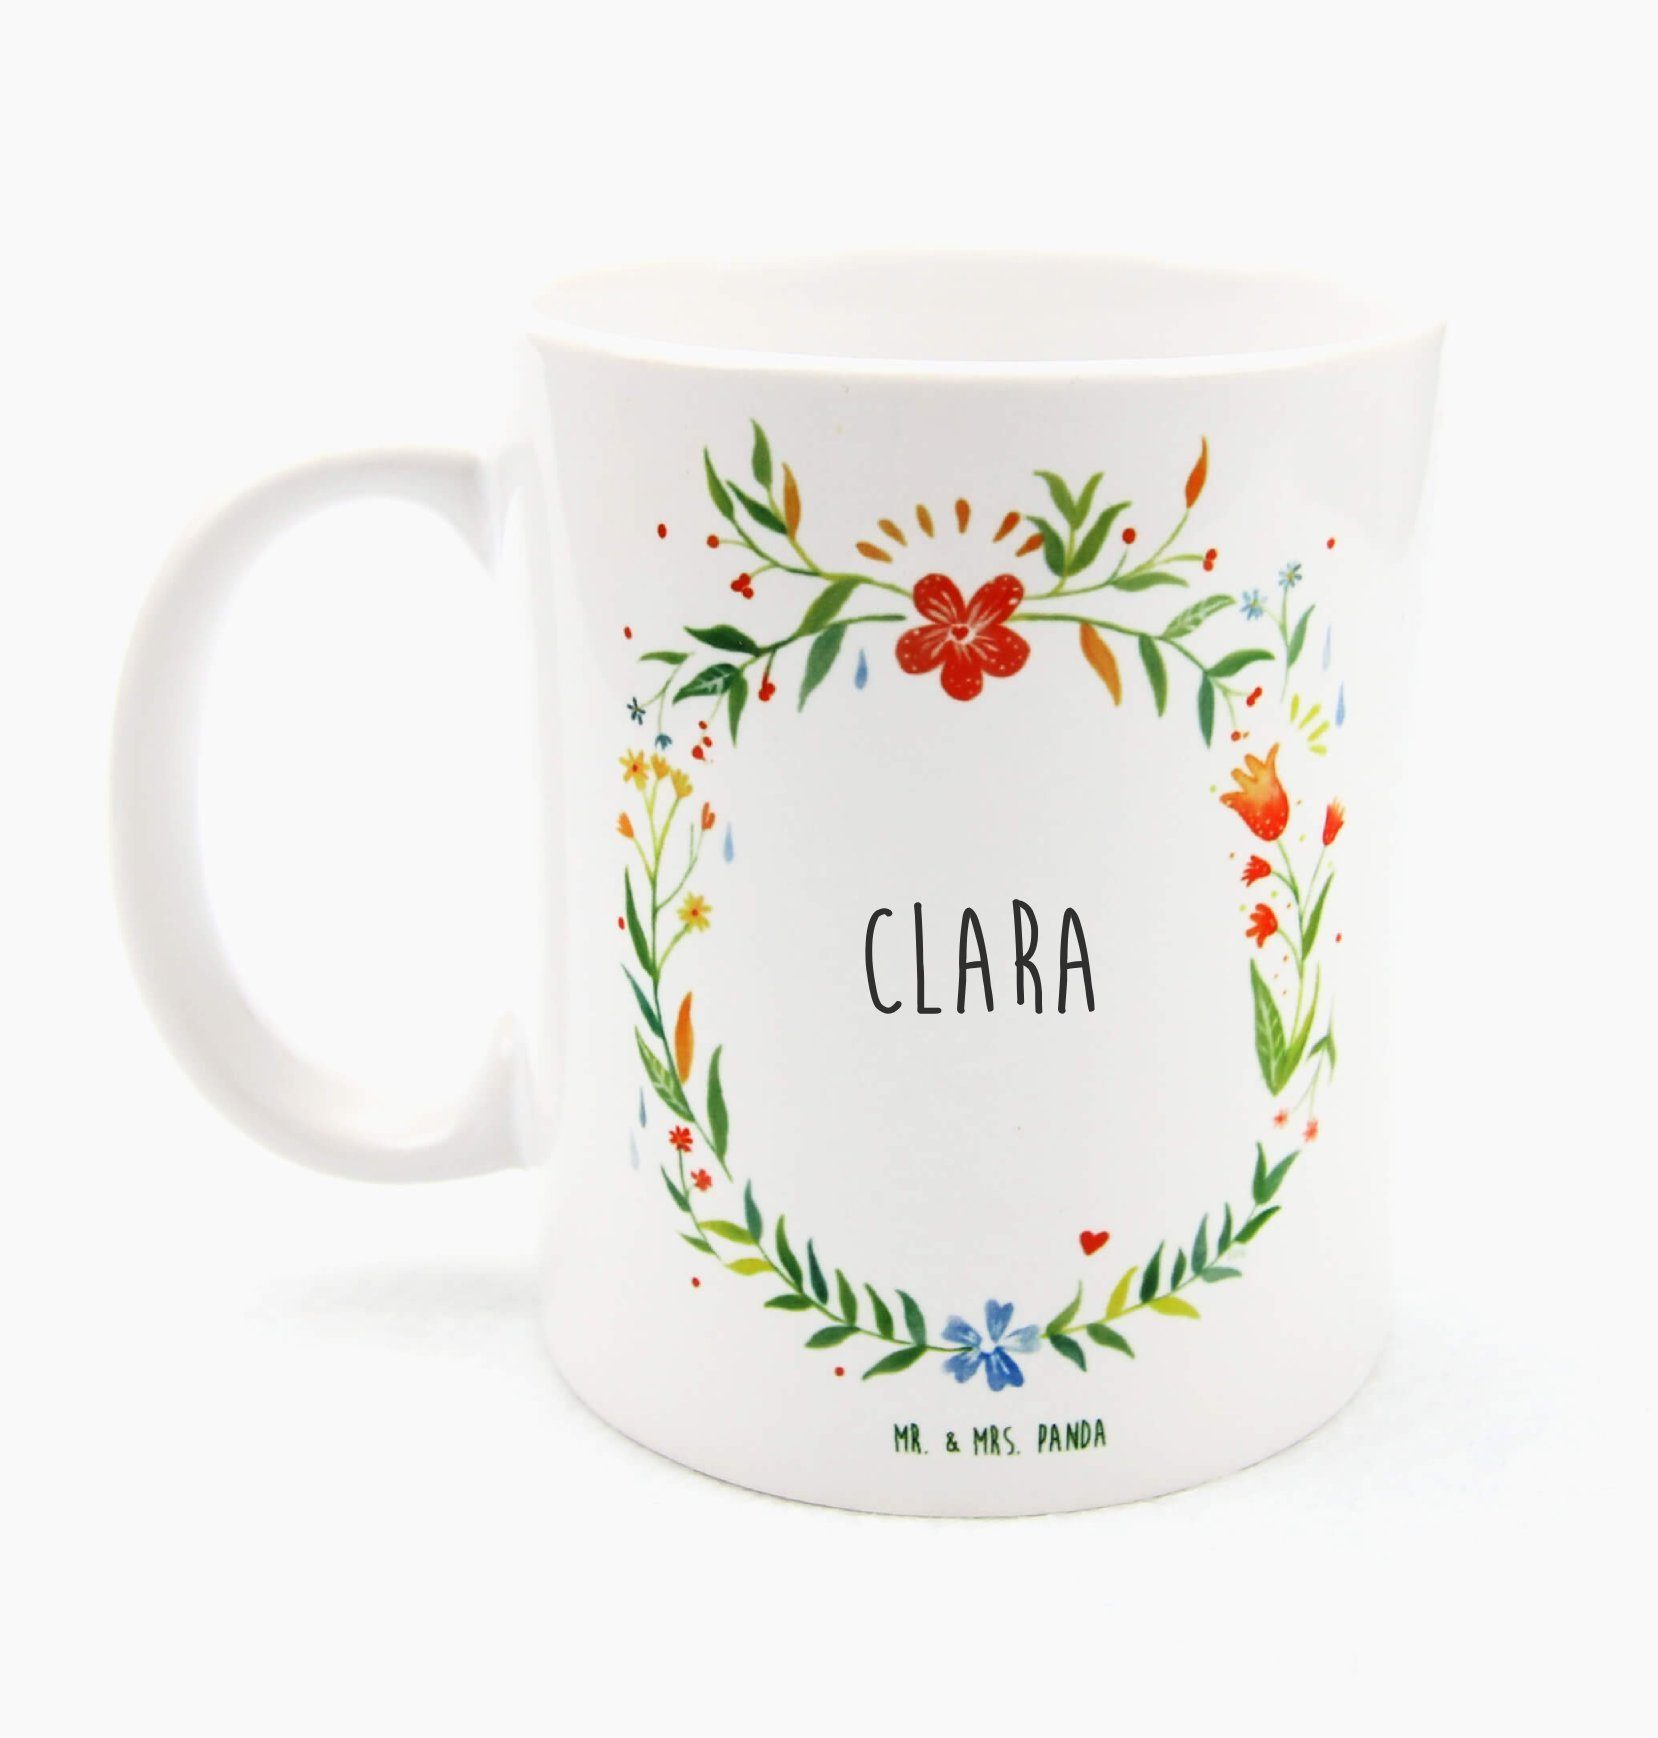 Mr. & Mrs. Panda Tasse Clara - Geschenk, Teebecher, Tasse Motive, Büro Tasse, Kaffeebecher, Keramik